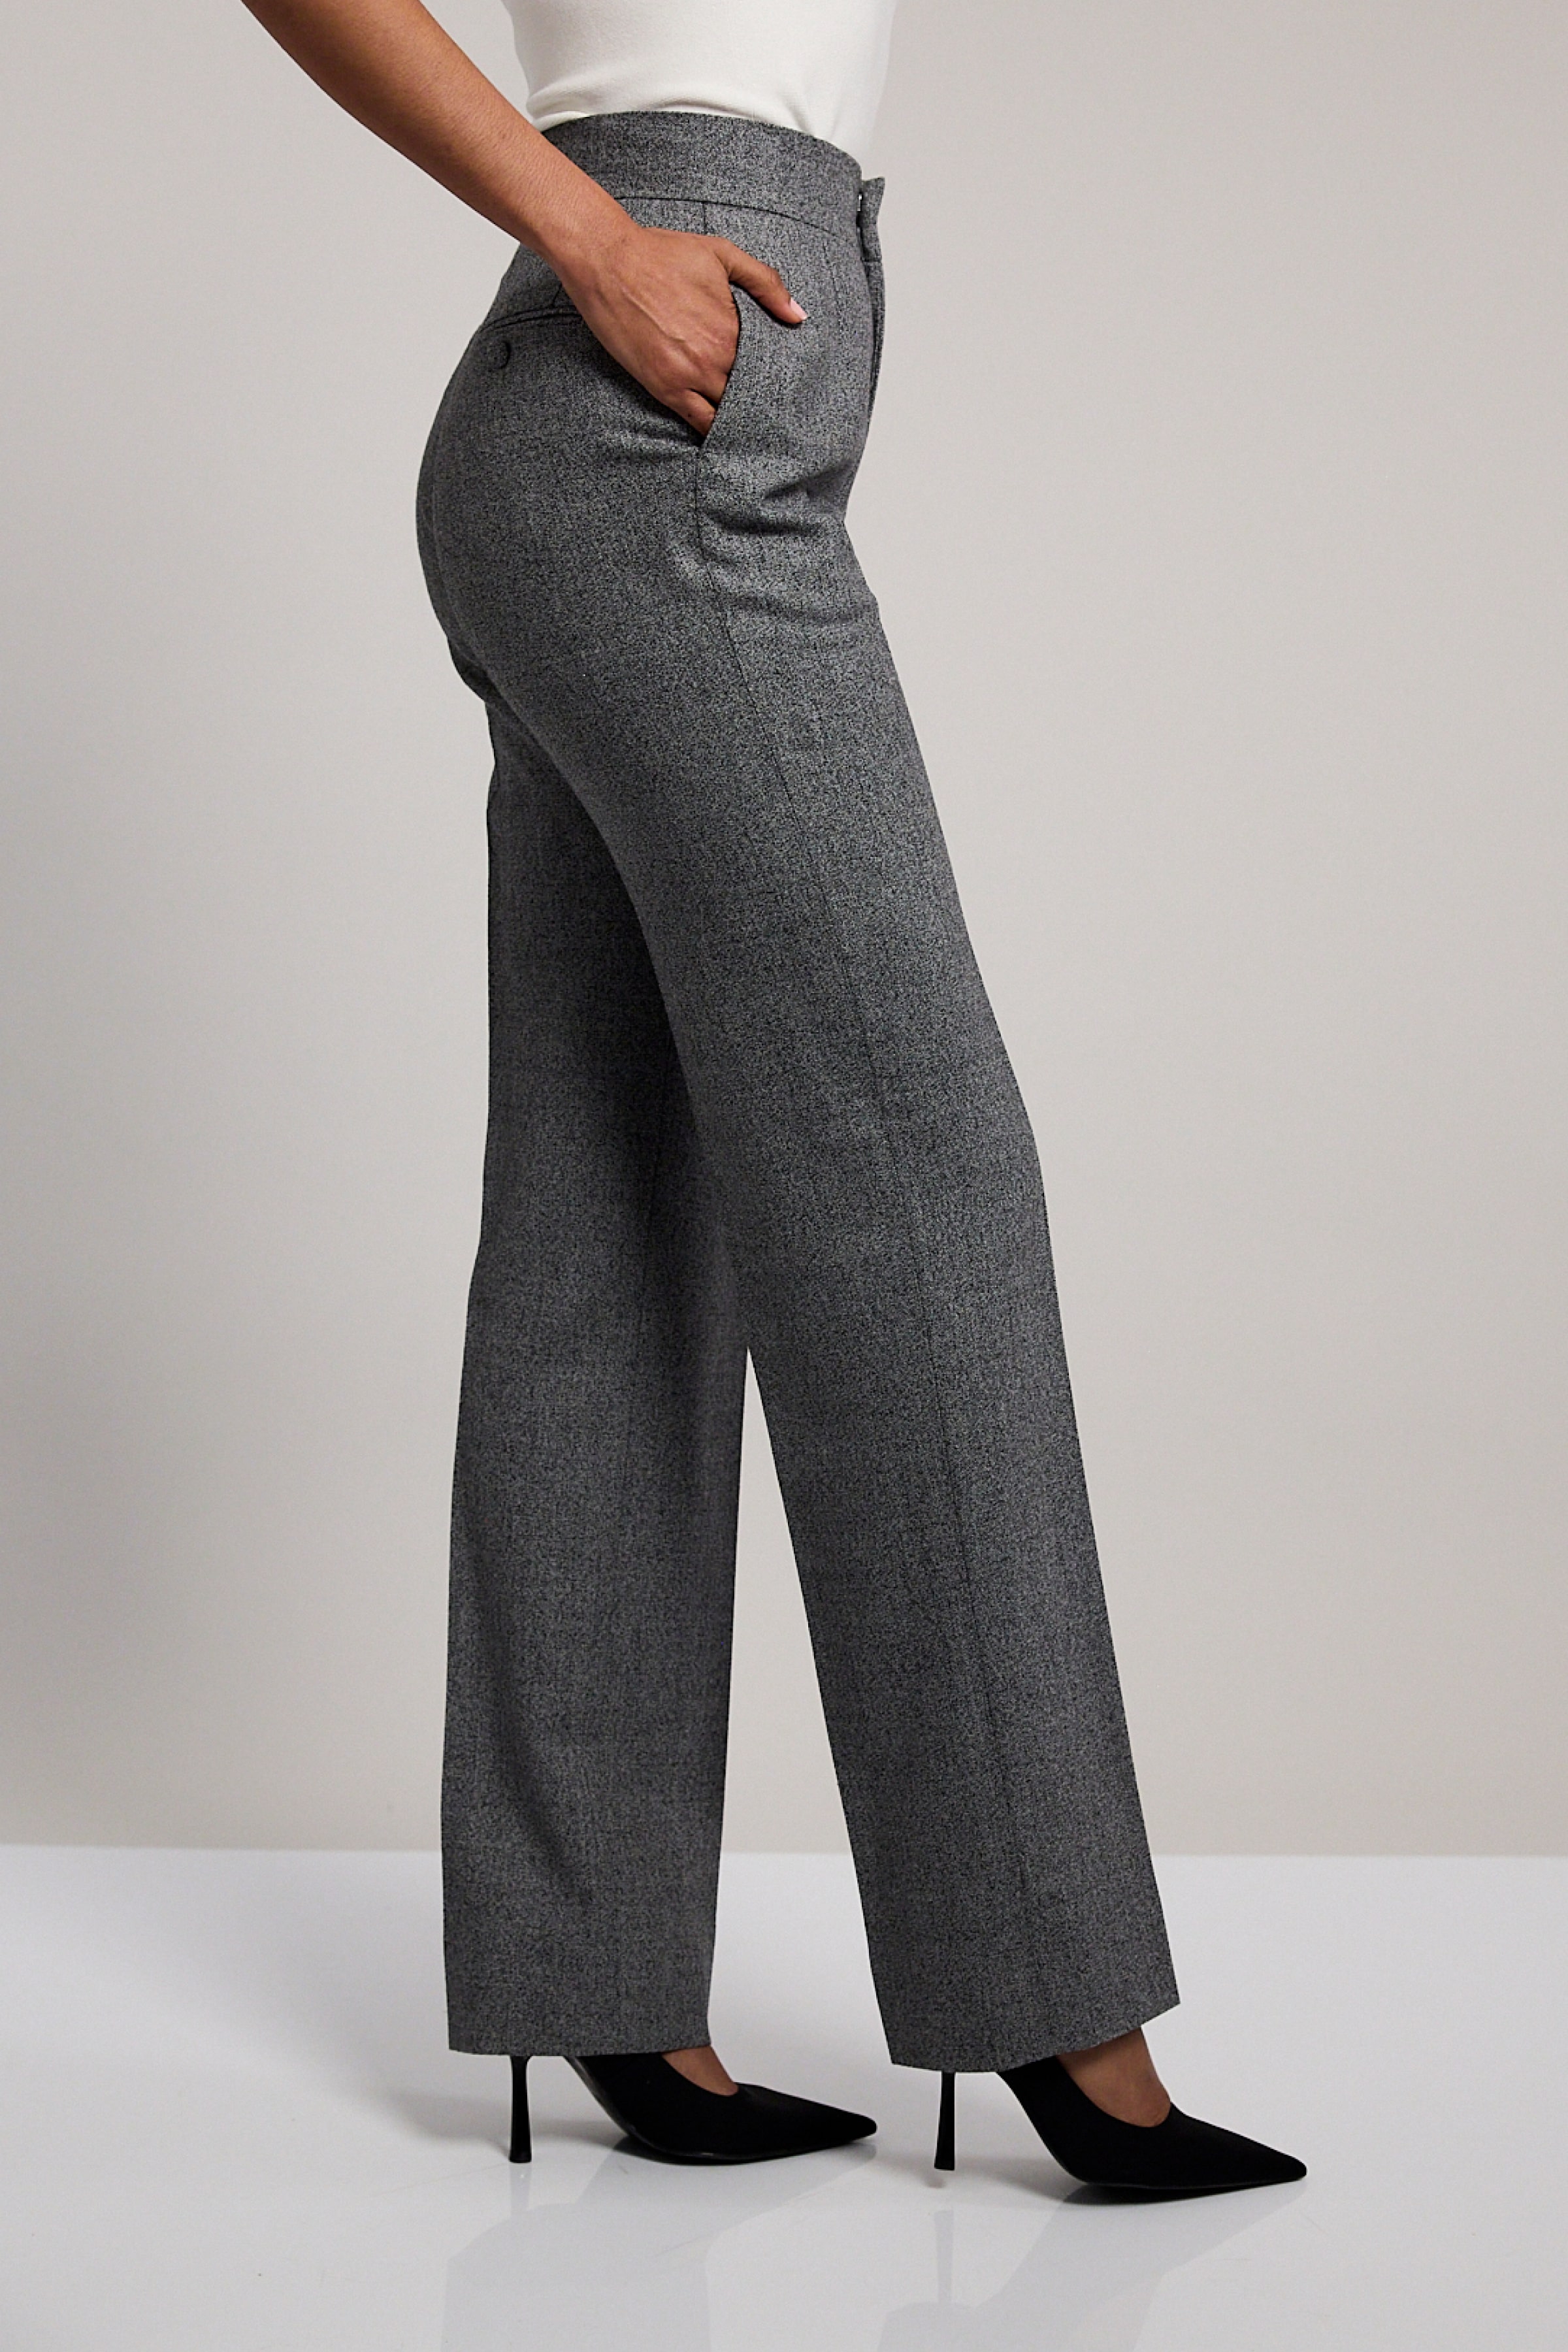 Kerry Knoll Dark Grey Textured Straight Leg Pant by Knot Standard